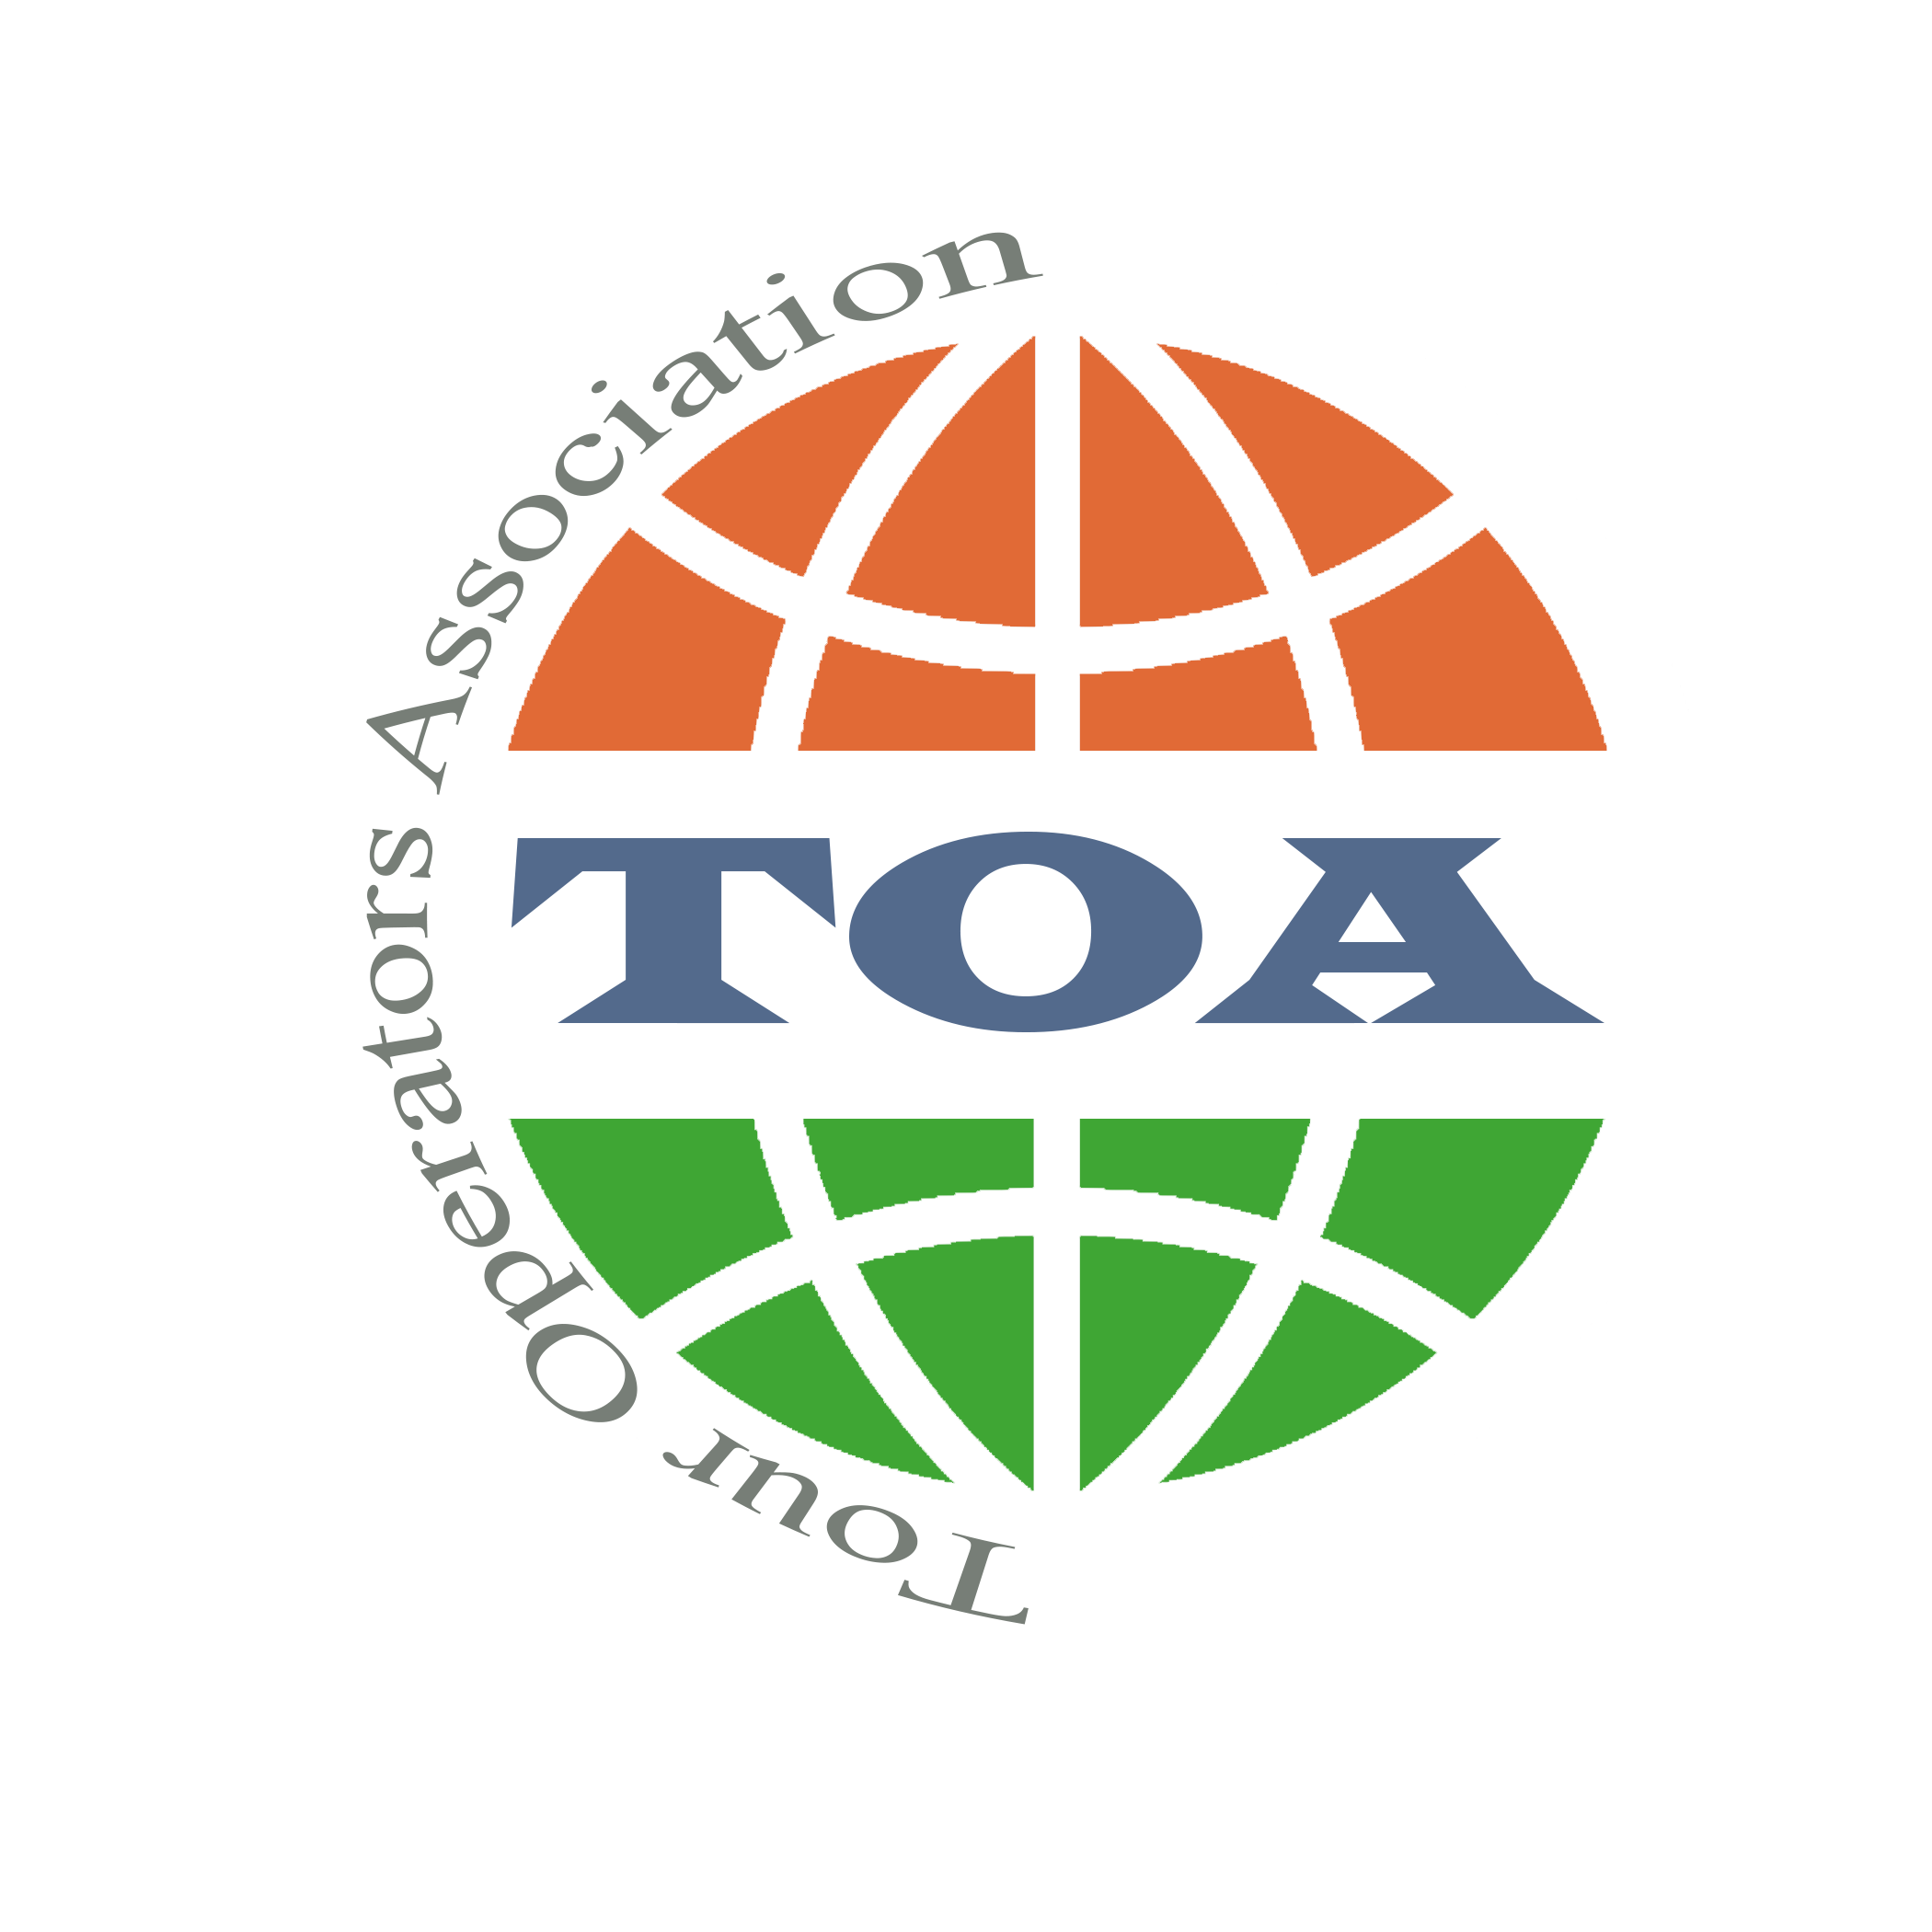 botswana tour operators association